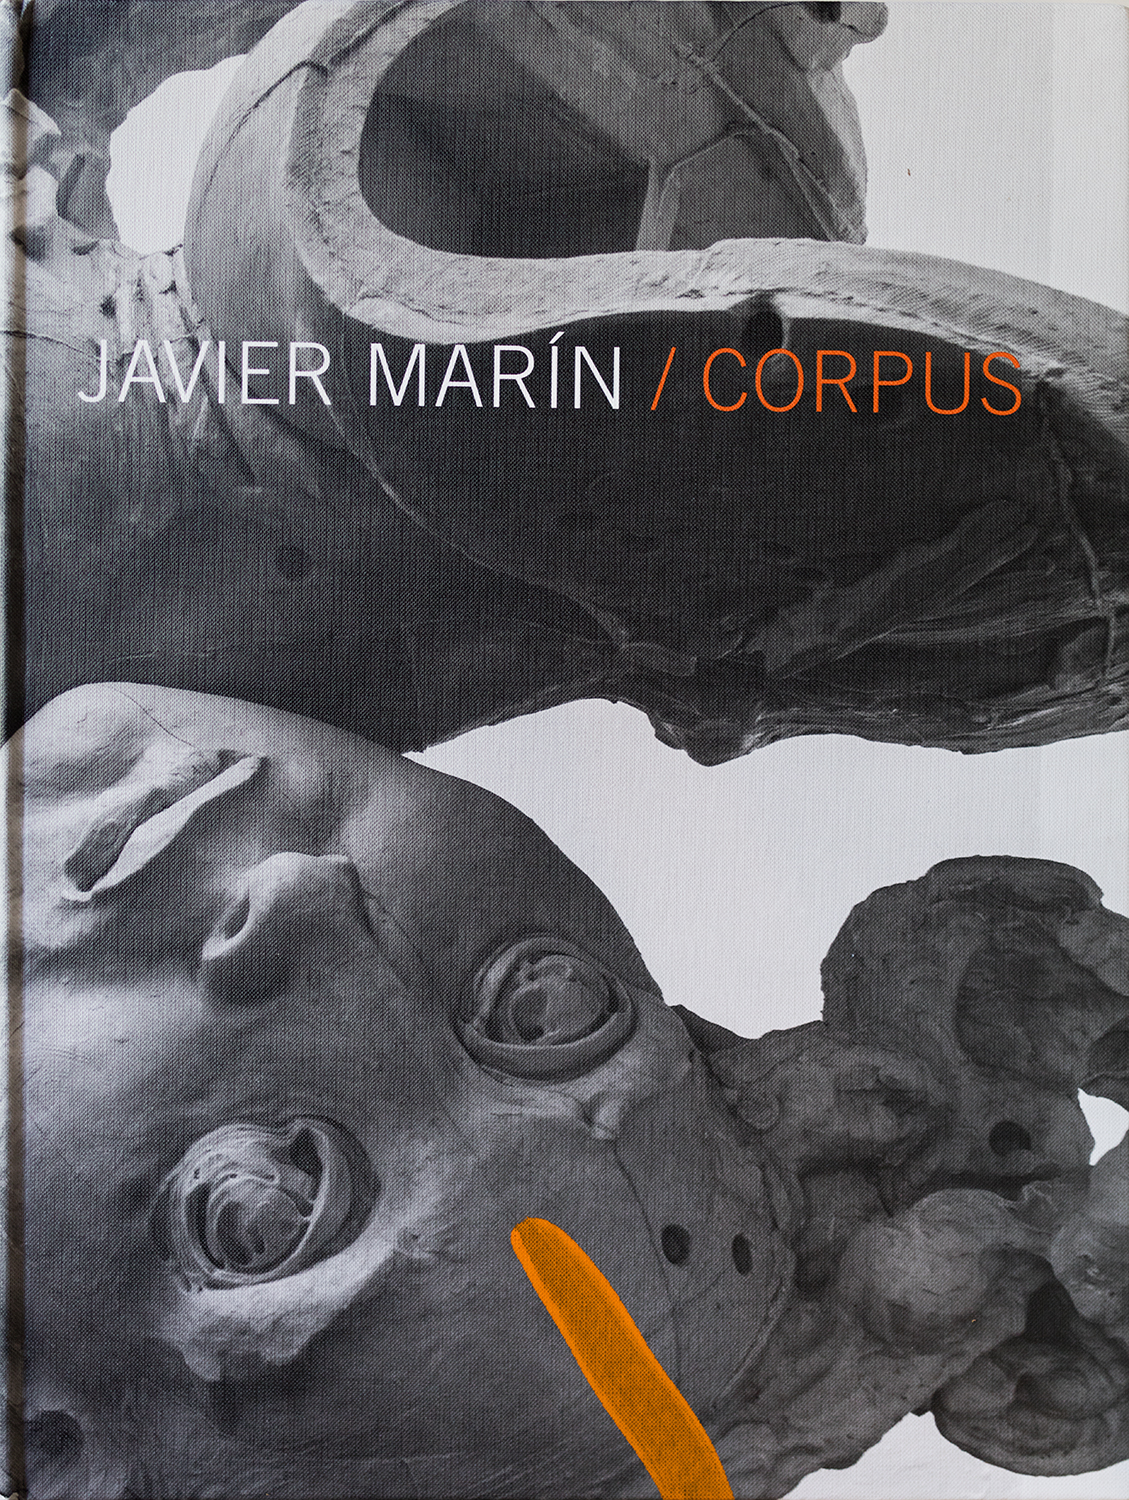 Publication of the book Javier Marín Corpus / Commemorative edition